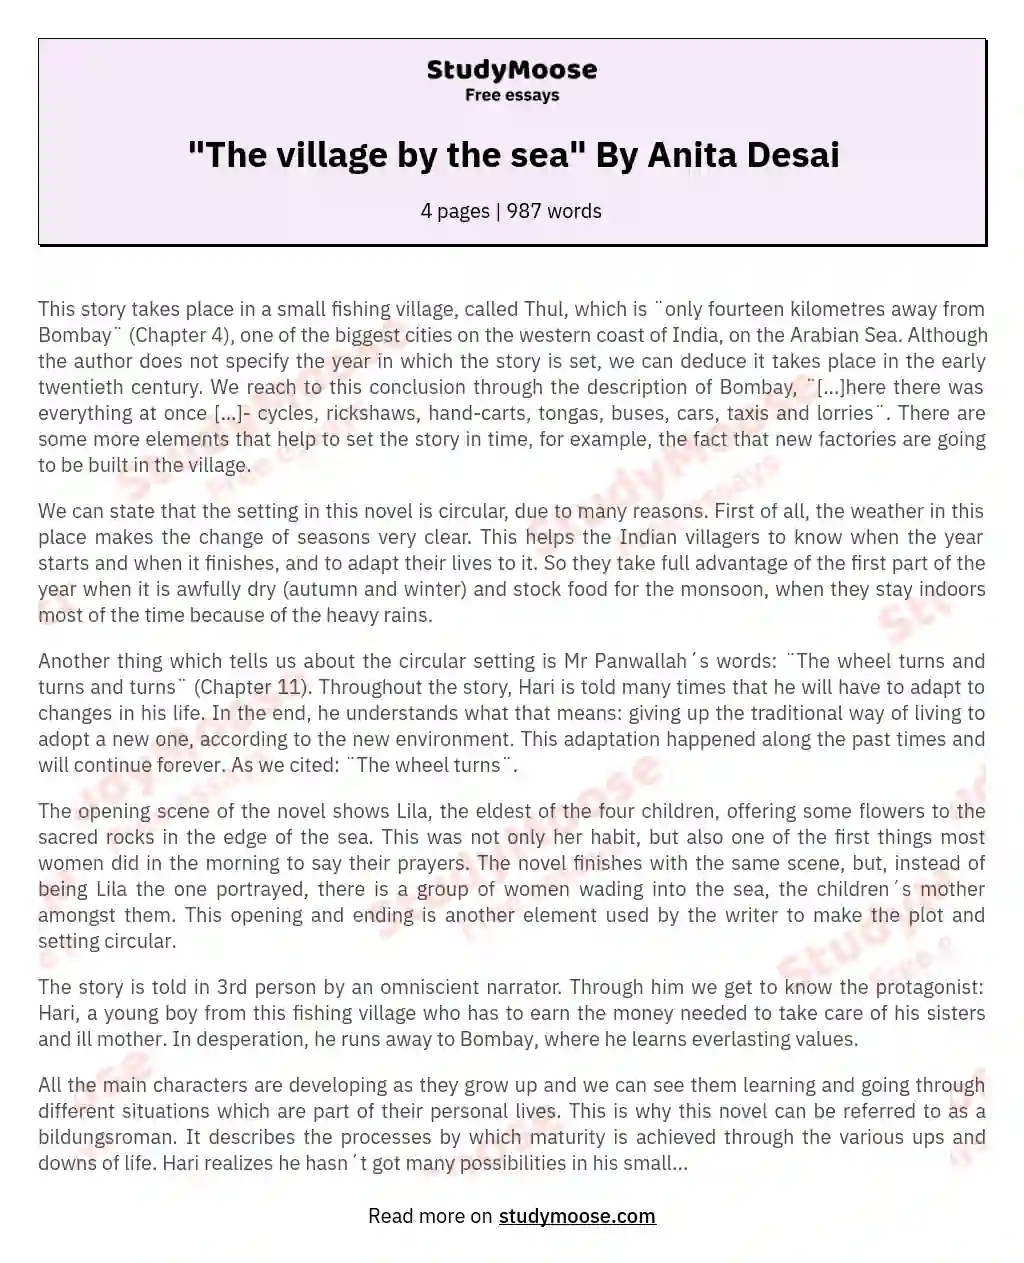 "The village by the sea" By Anita Desai essay